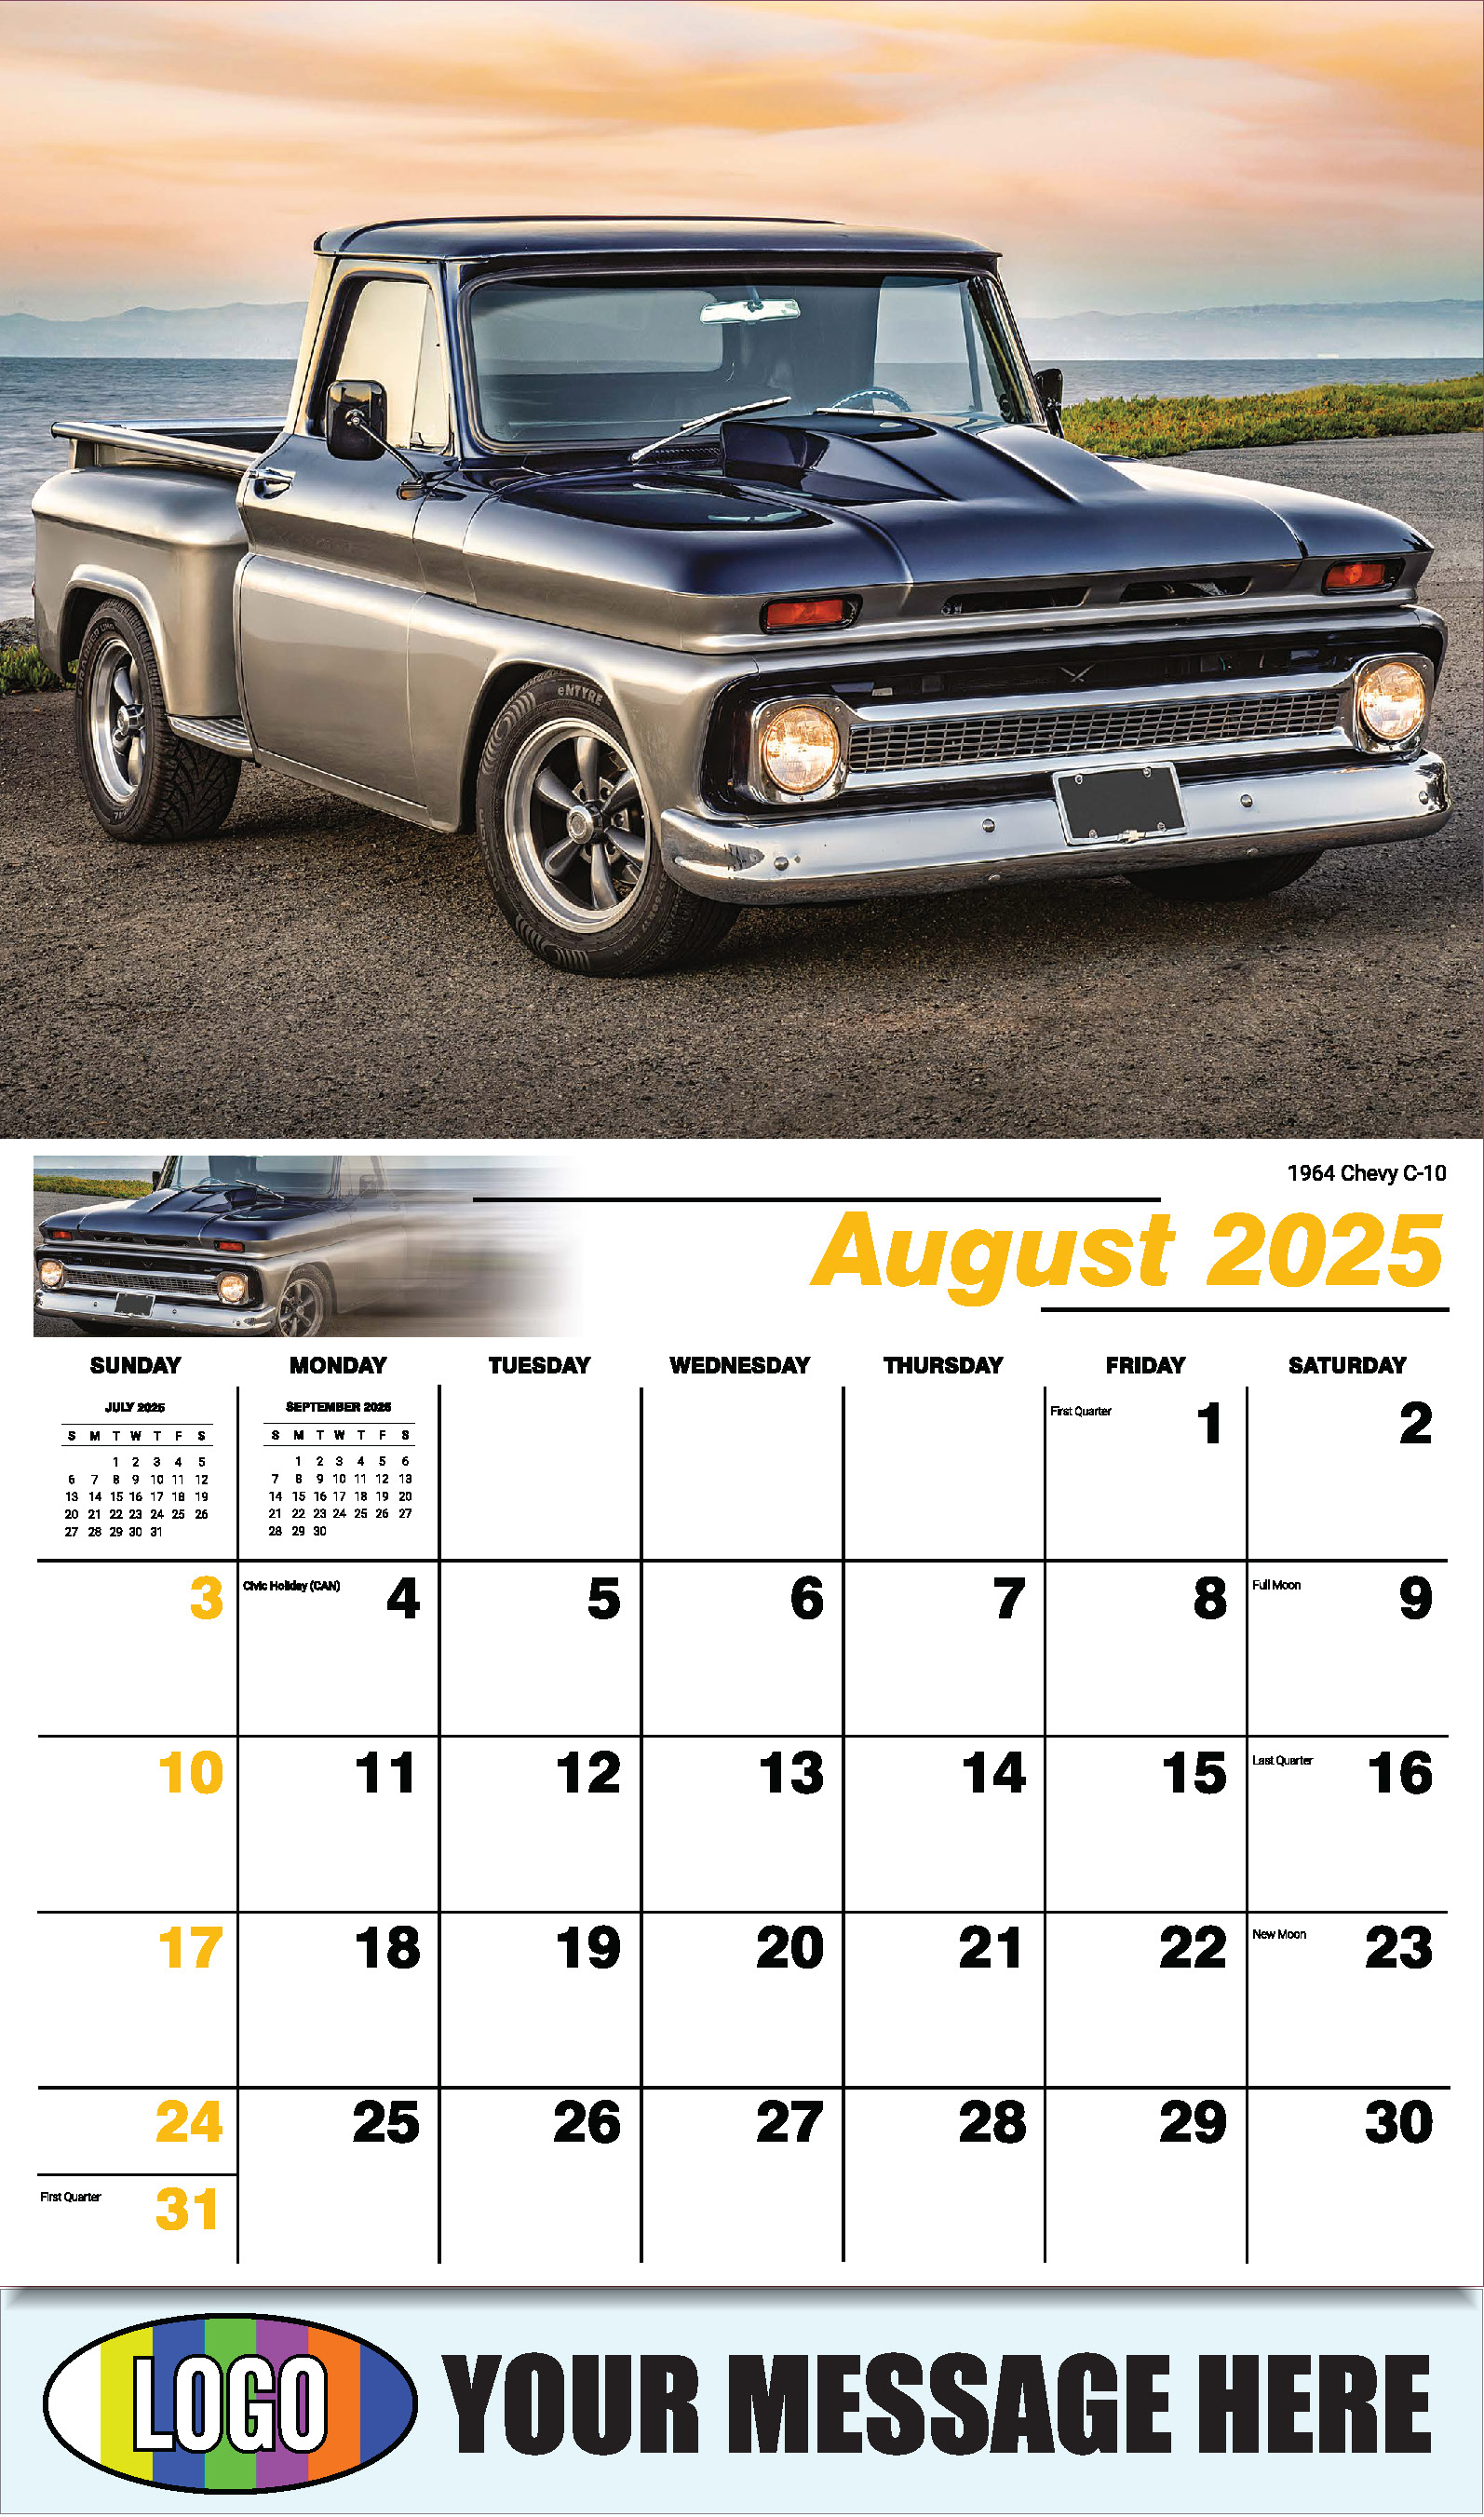 Pumped-Up Pickups 2025 Automotive Business Promo Calendar - August